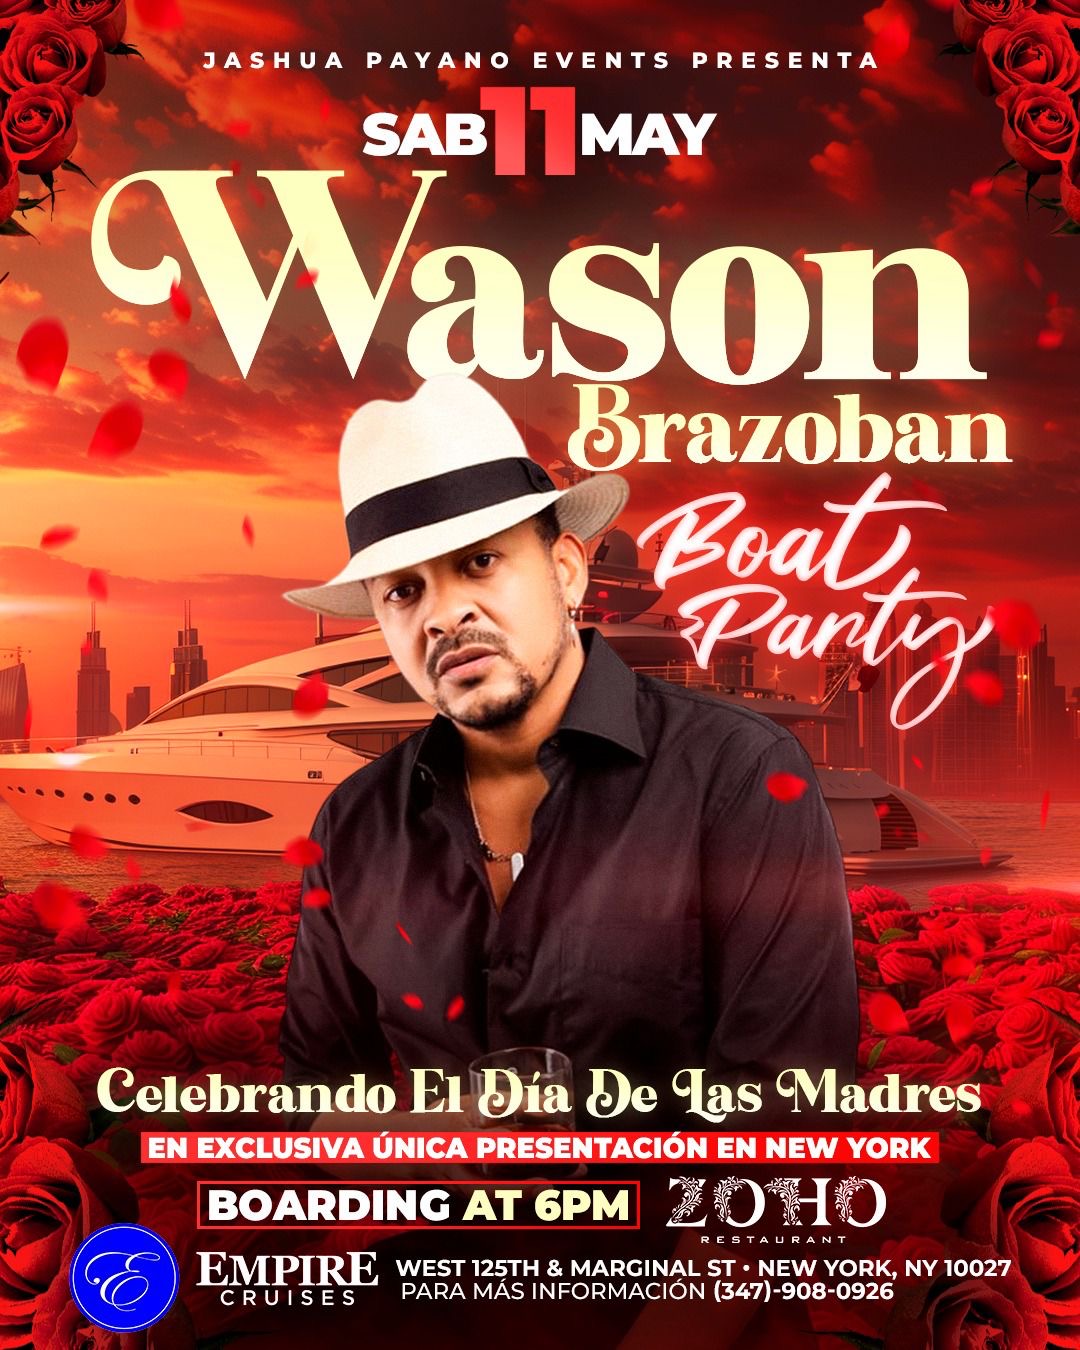 WASON BRAZOBAN BOAT PARTY